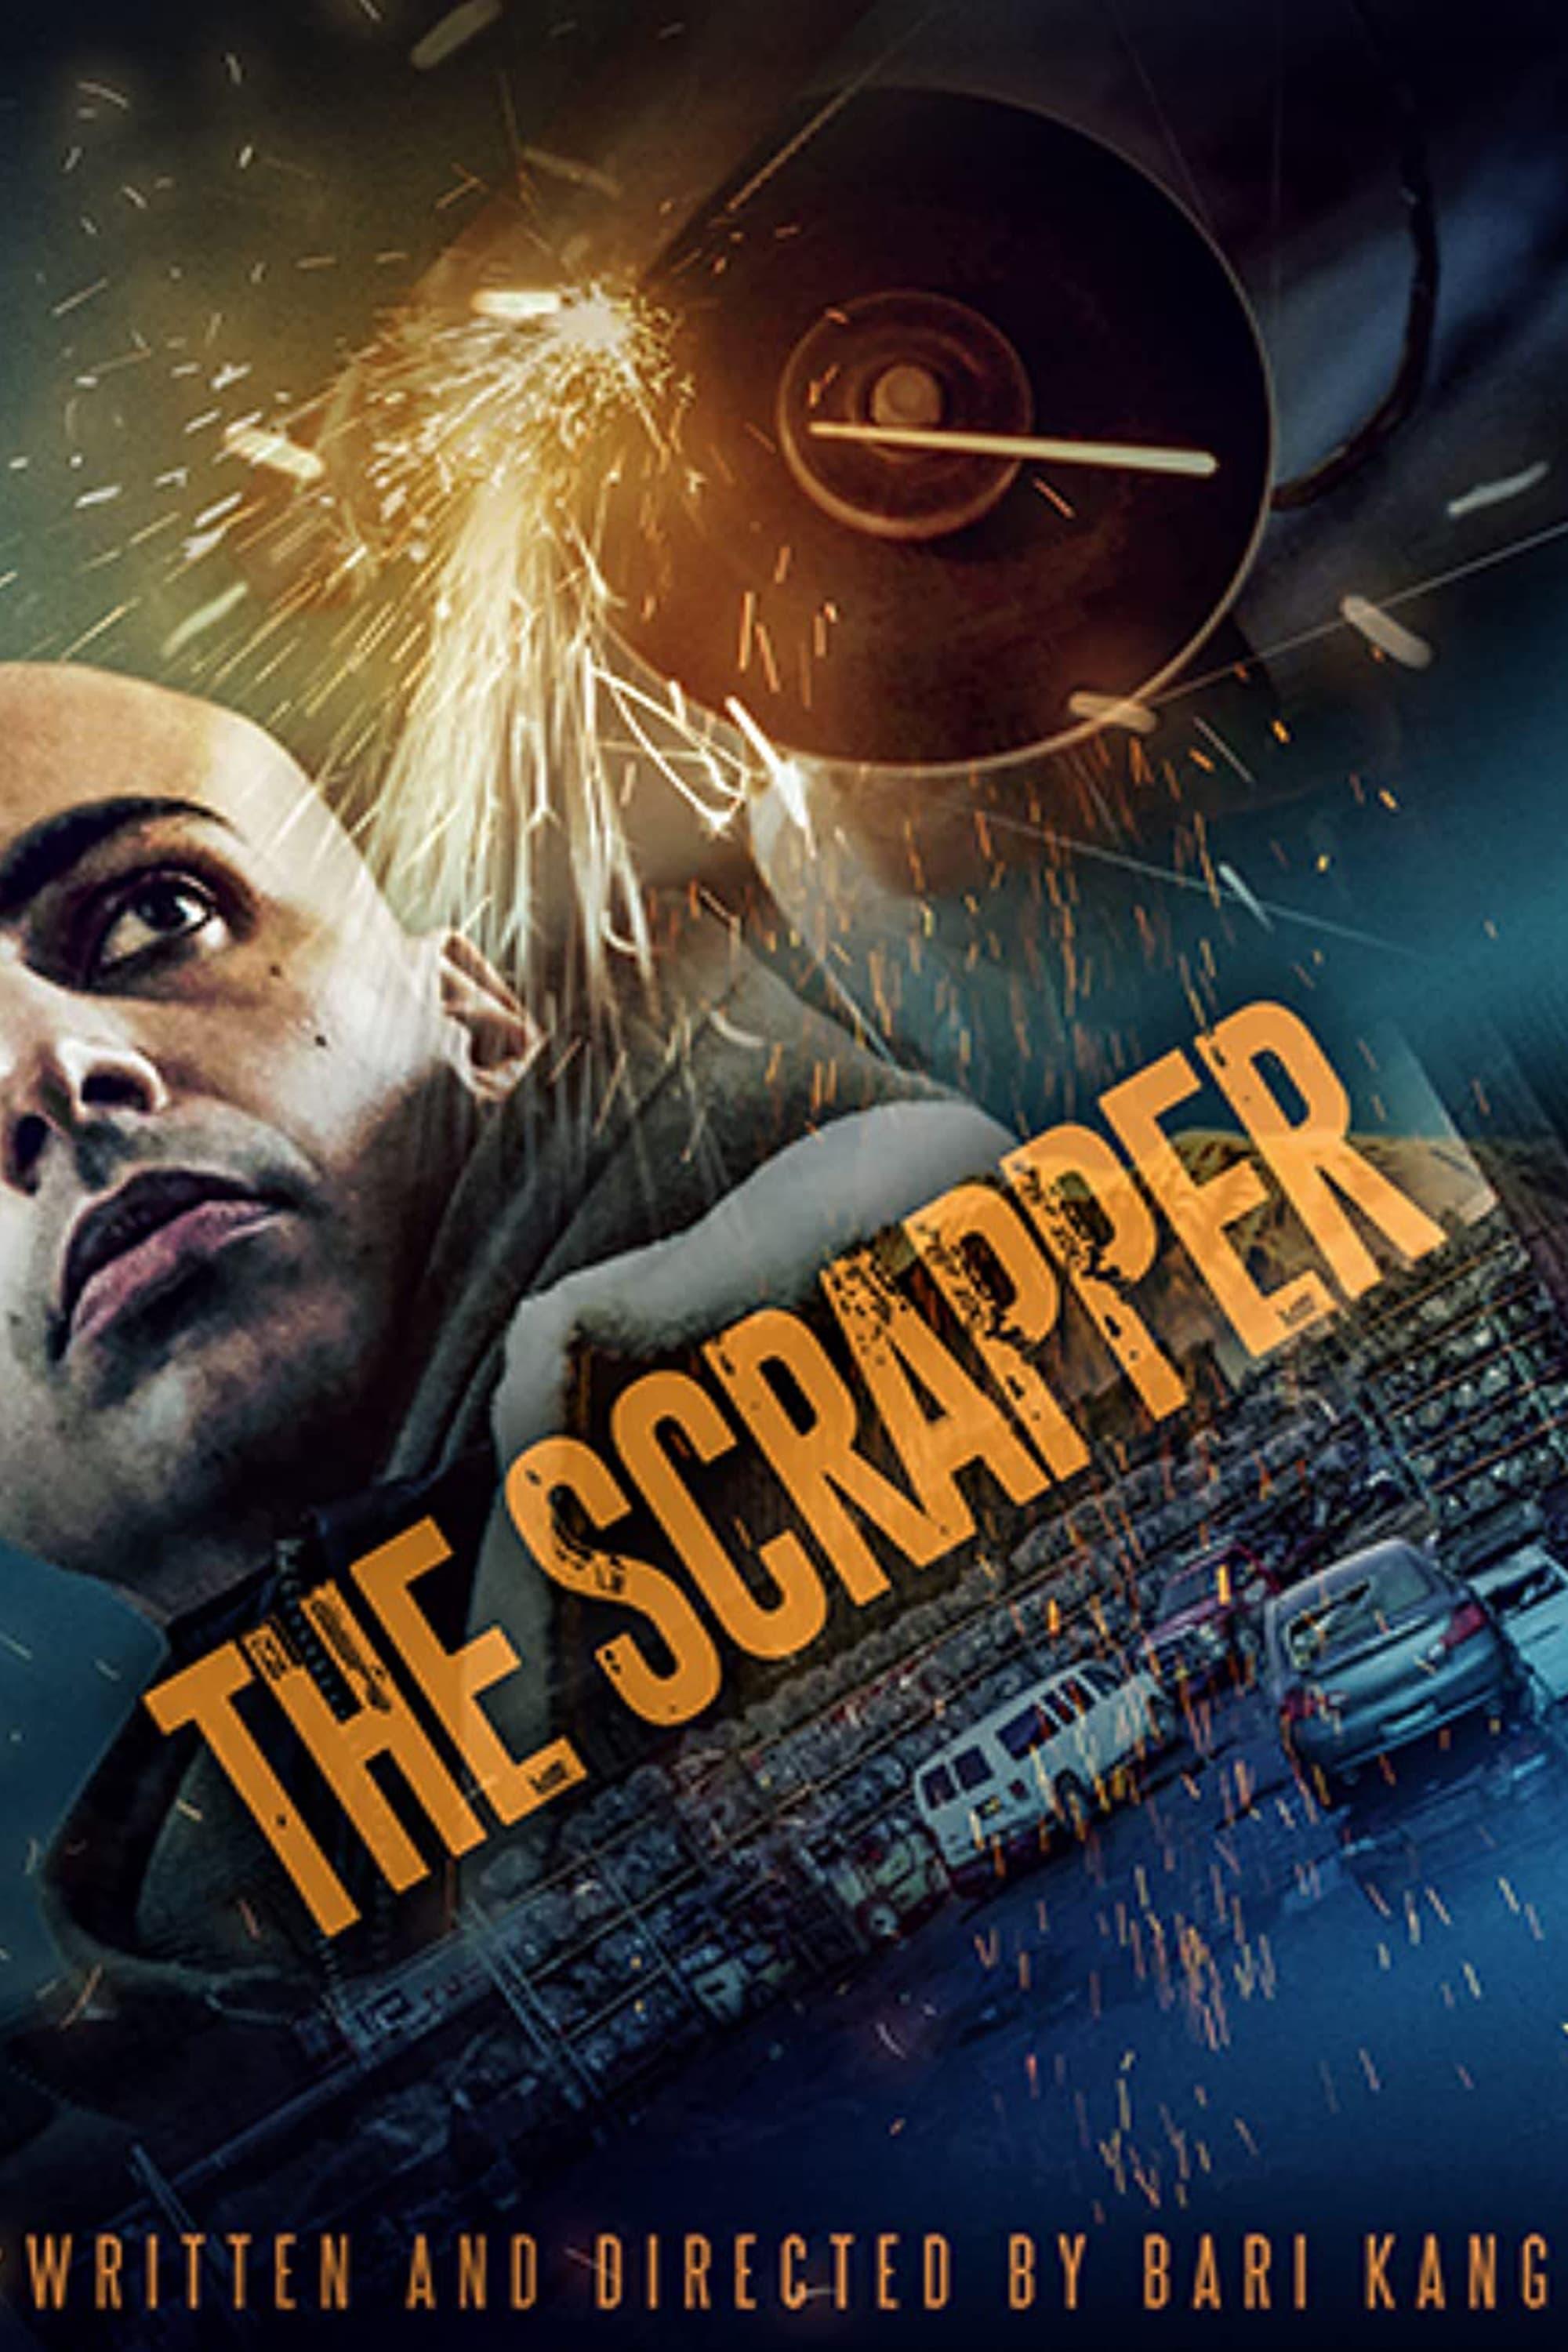 The Scrapper poster